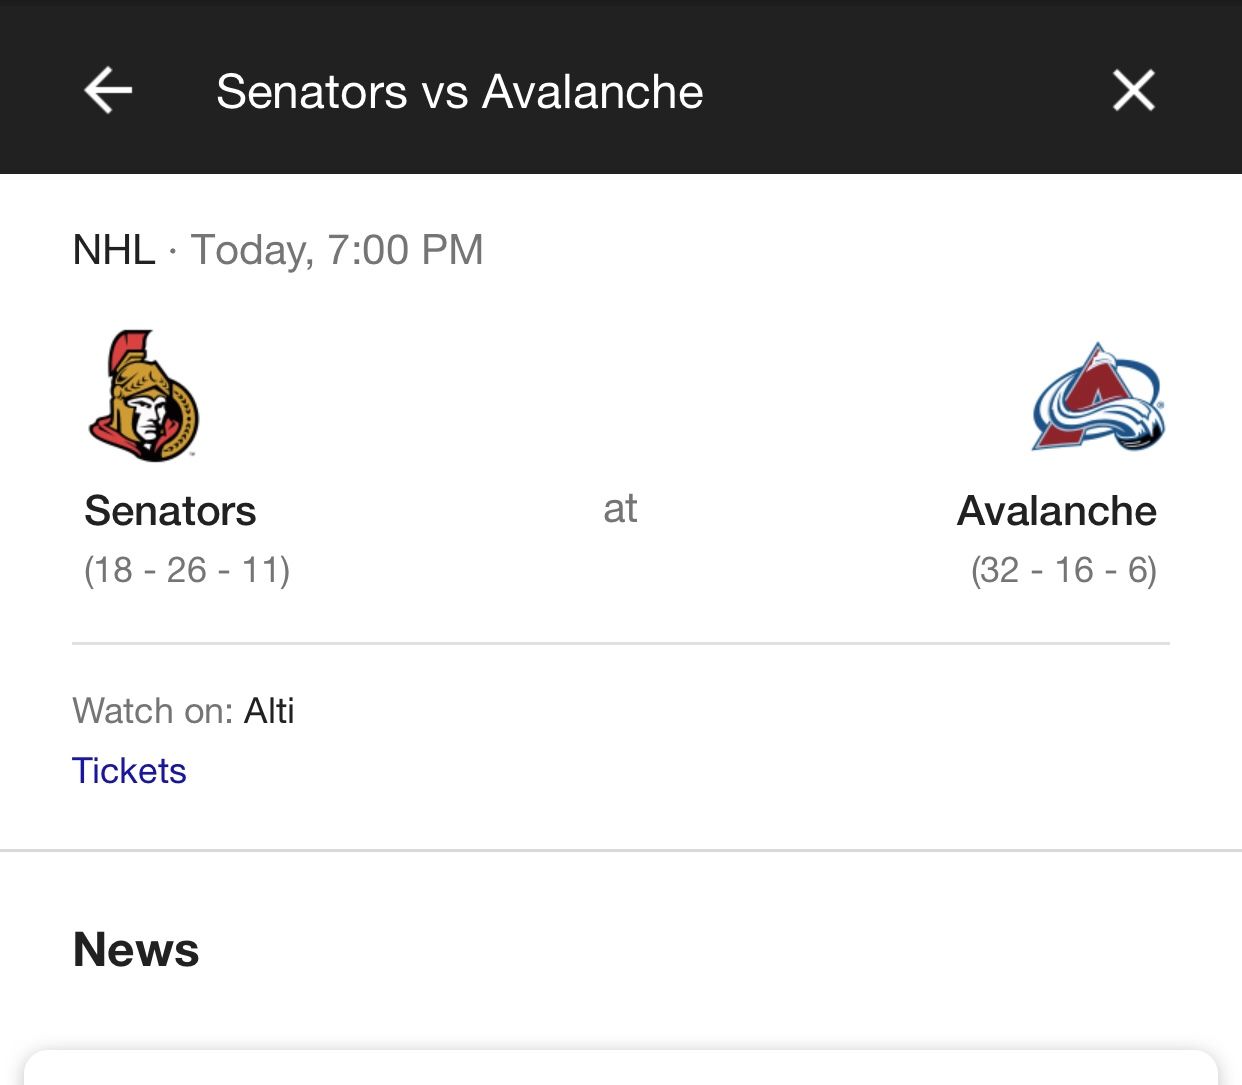 Avalanche Senators tonight